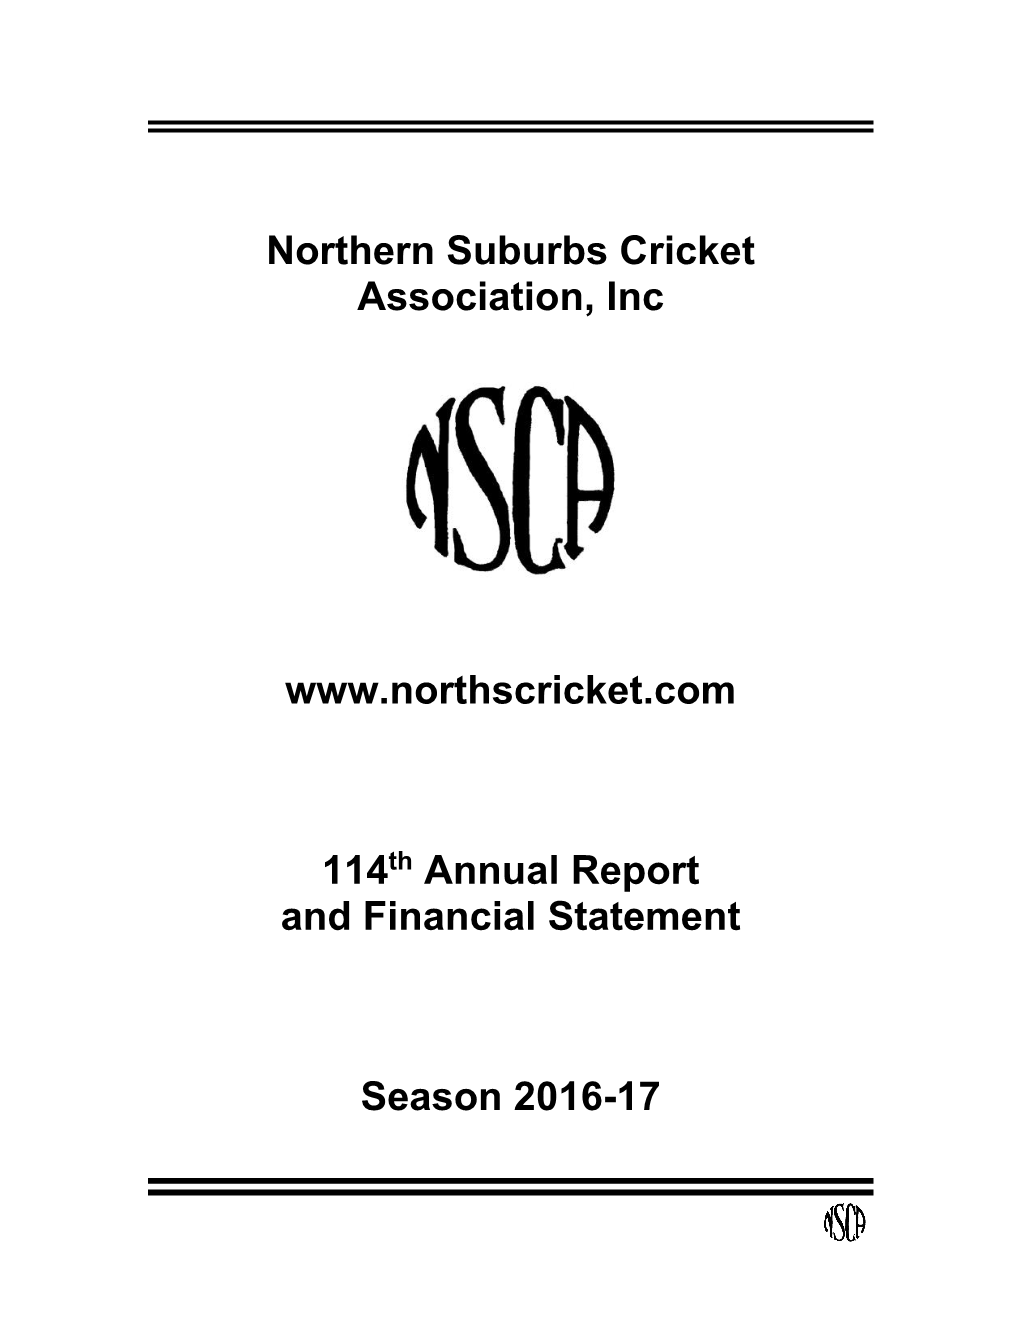 Northern Suburbs Cricket Association, Inc